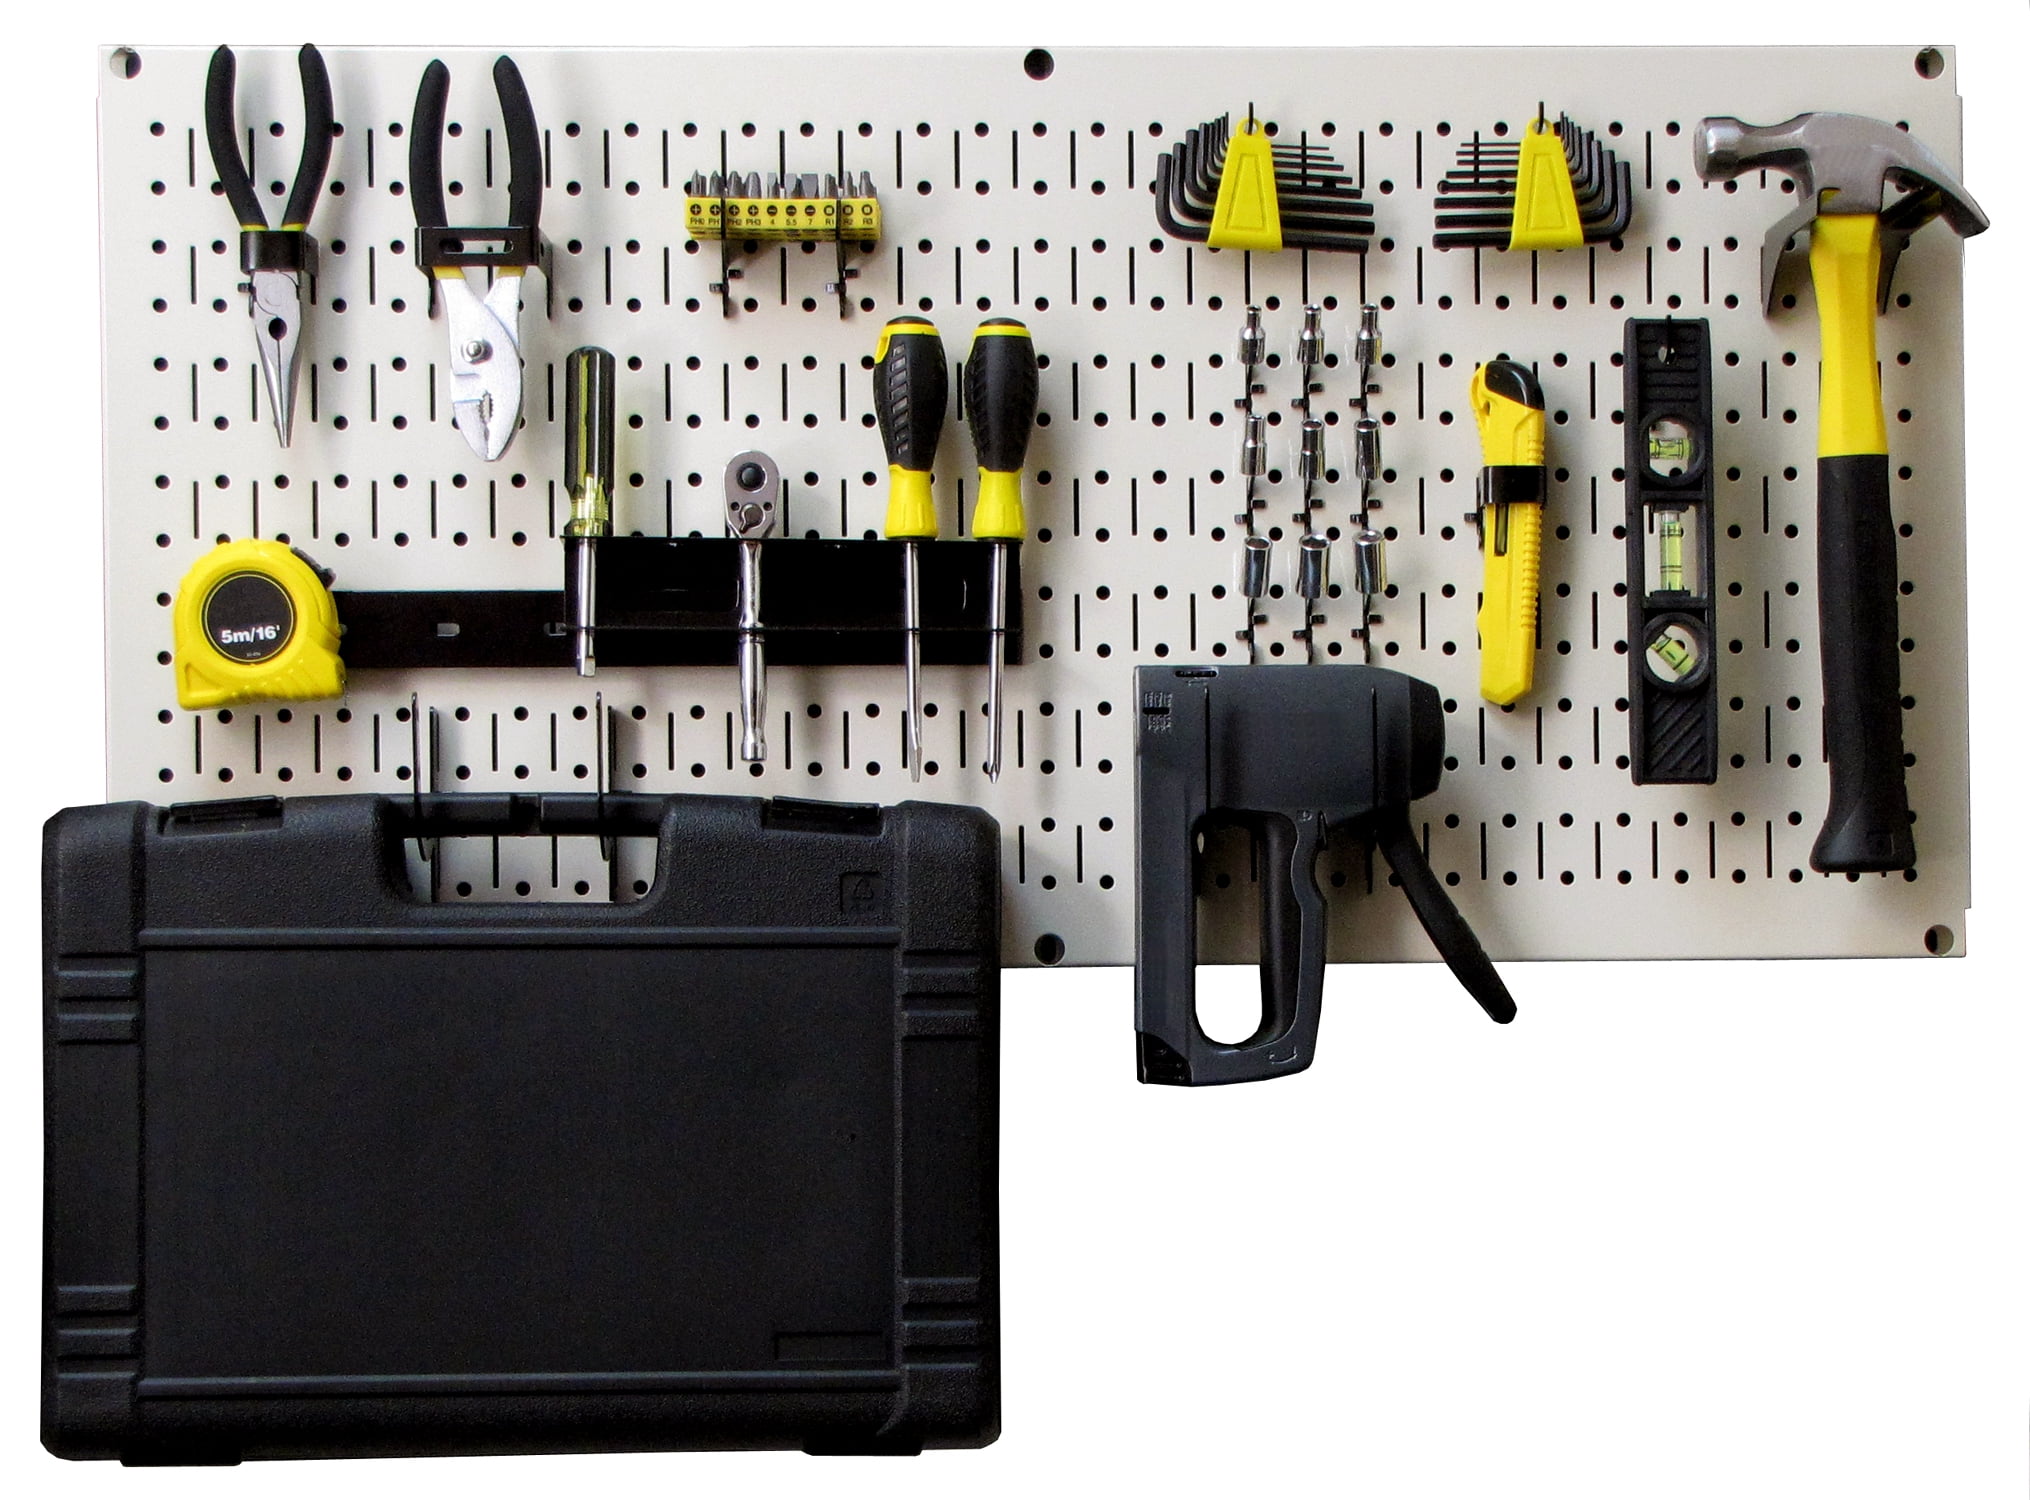 L X W X T Festnight Wall Control Pegboard Wall-Mounted Peg Boards Tool Pegboard Tool Organizer System Tool Storage Unit for Pegboard 4 Pcs Steel 15.7 X 22.8 X 0.4 